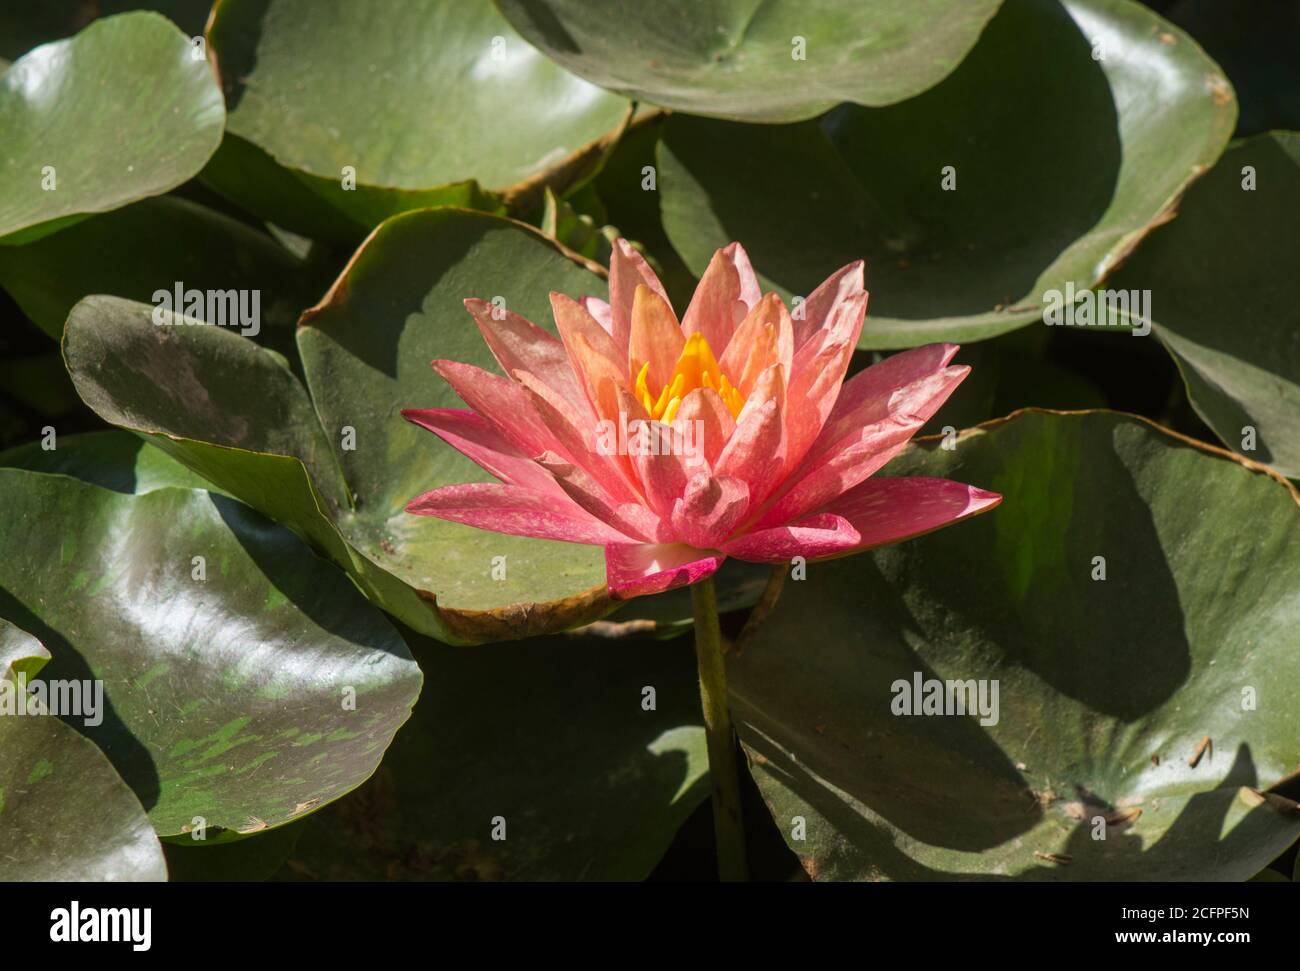 Wanvisa - Water lily (Nymphaea Wanvisa) in the botanical garden of Malaga, spain. Stock Photo